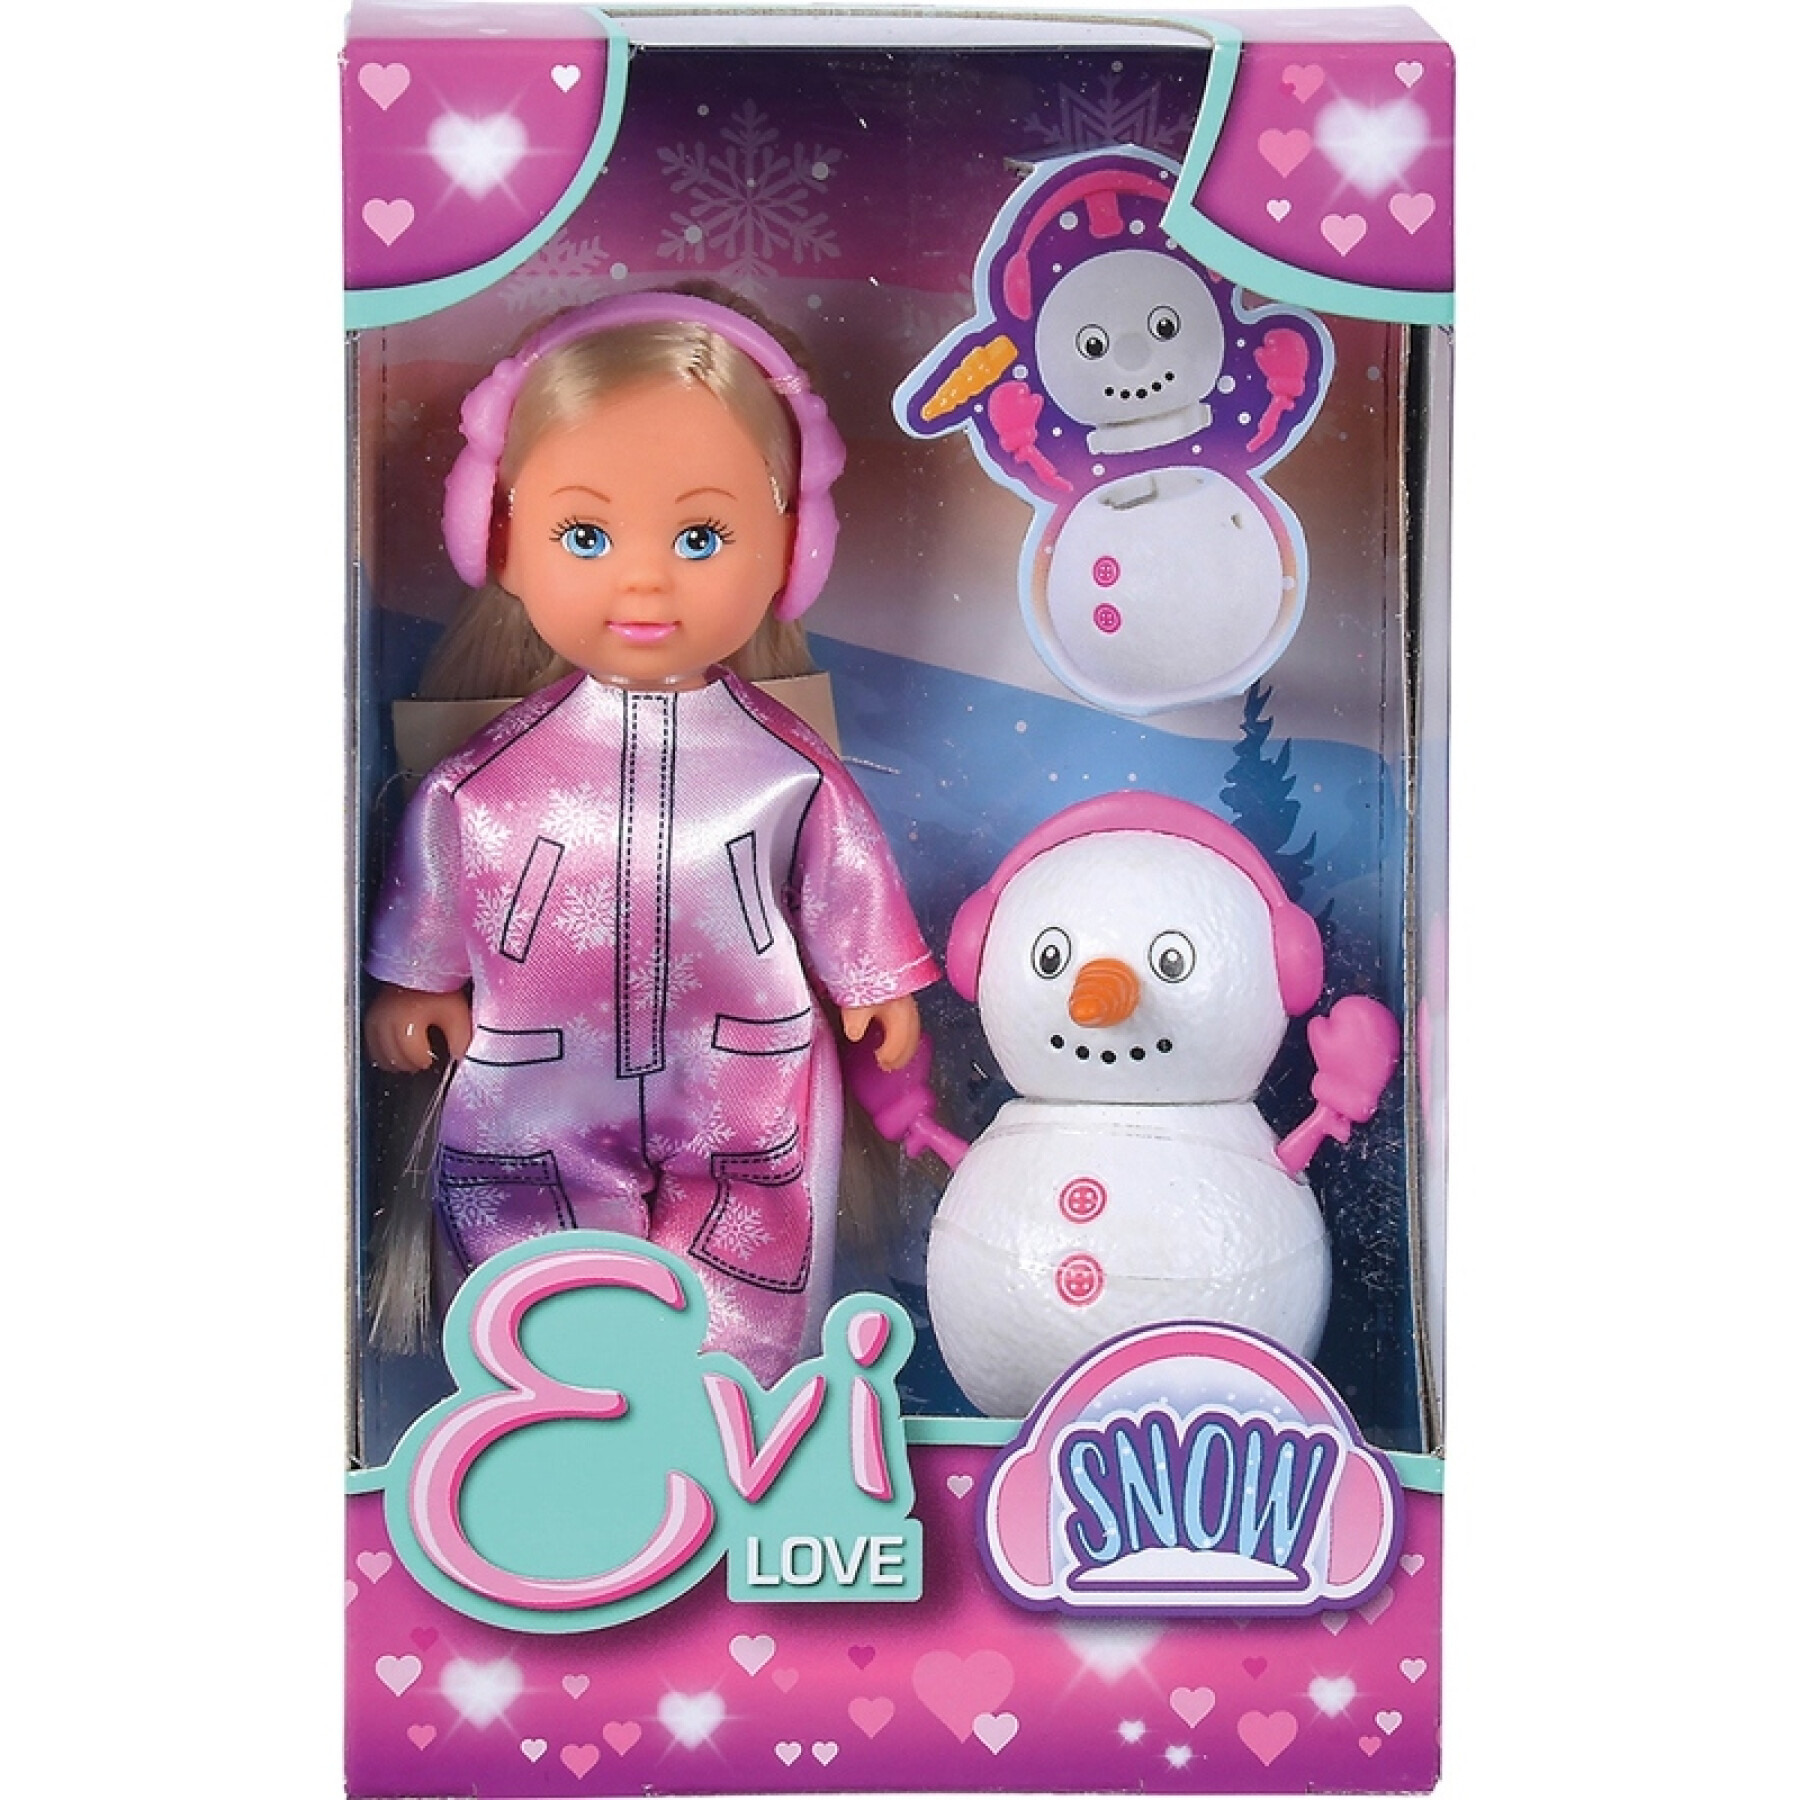 Boneca de neve Smoby Evi Love